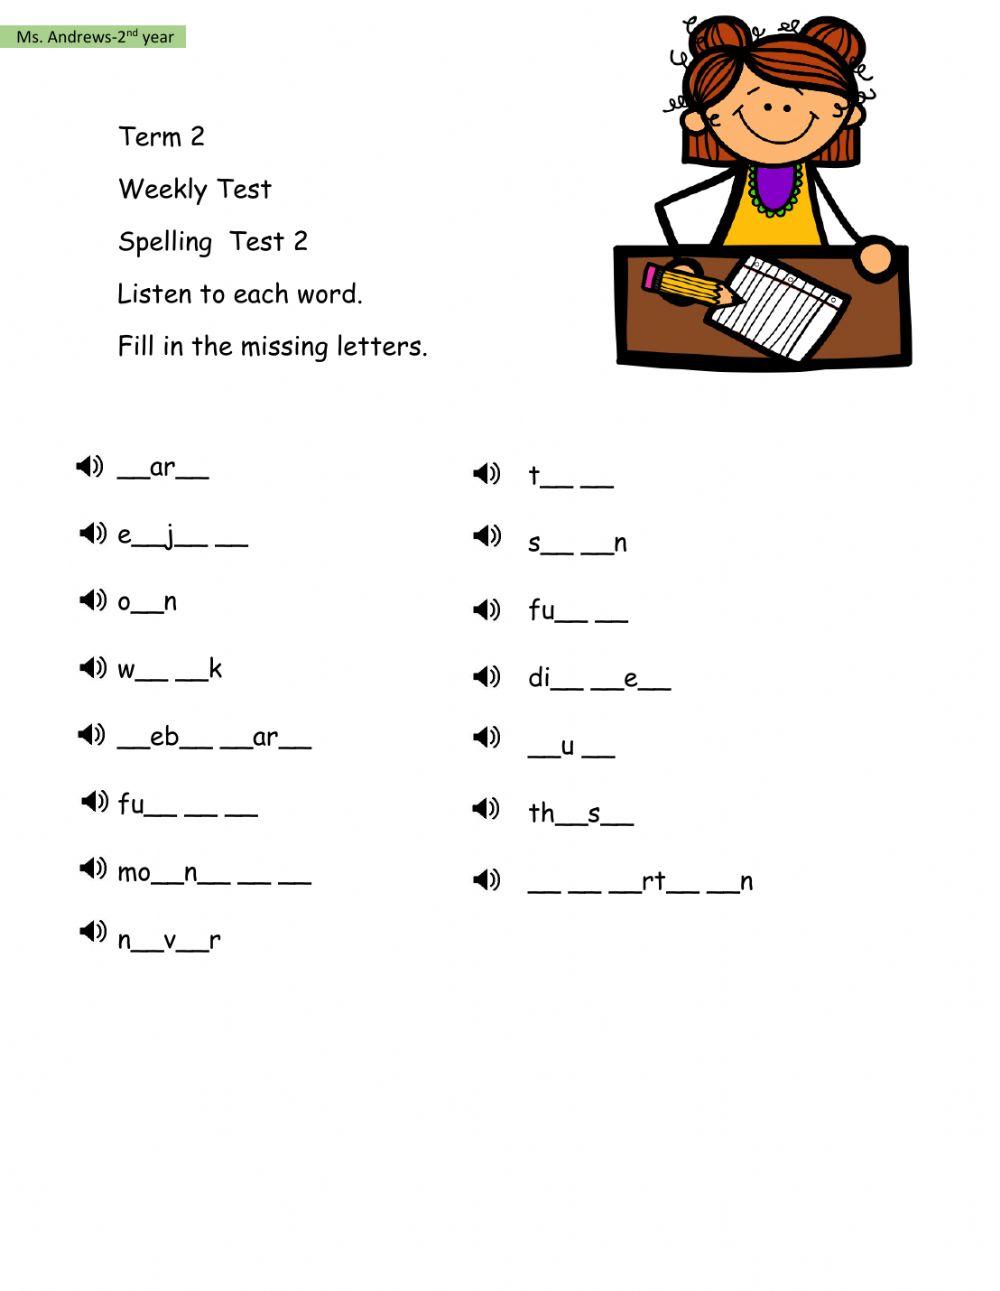 Term 2- Spelling Test 2